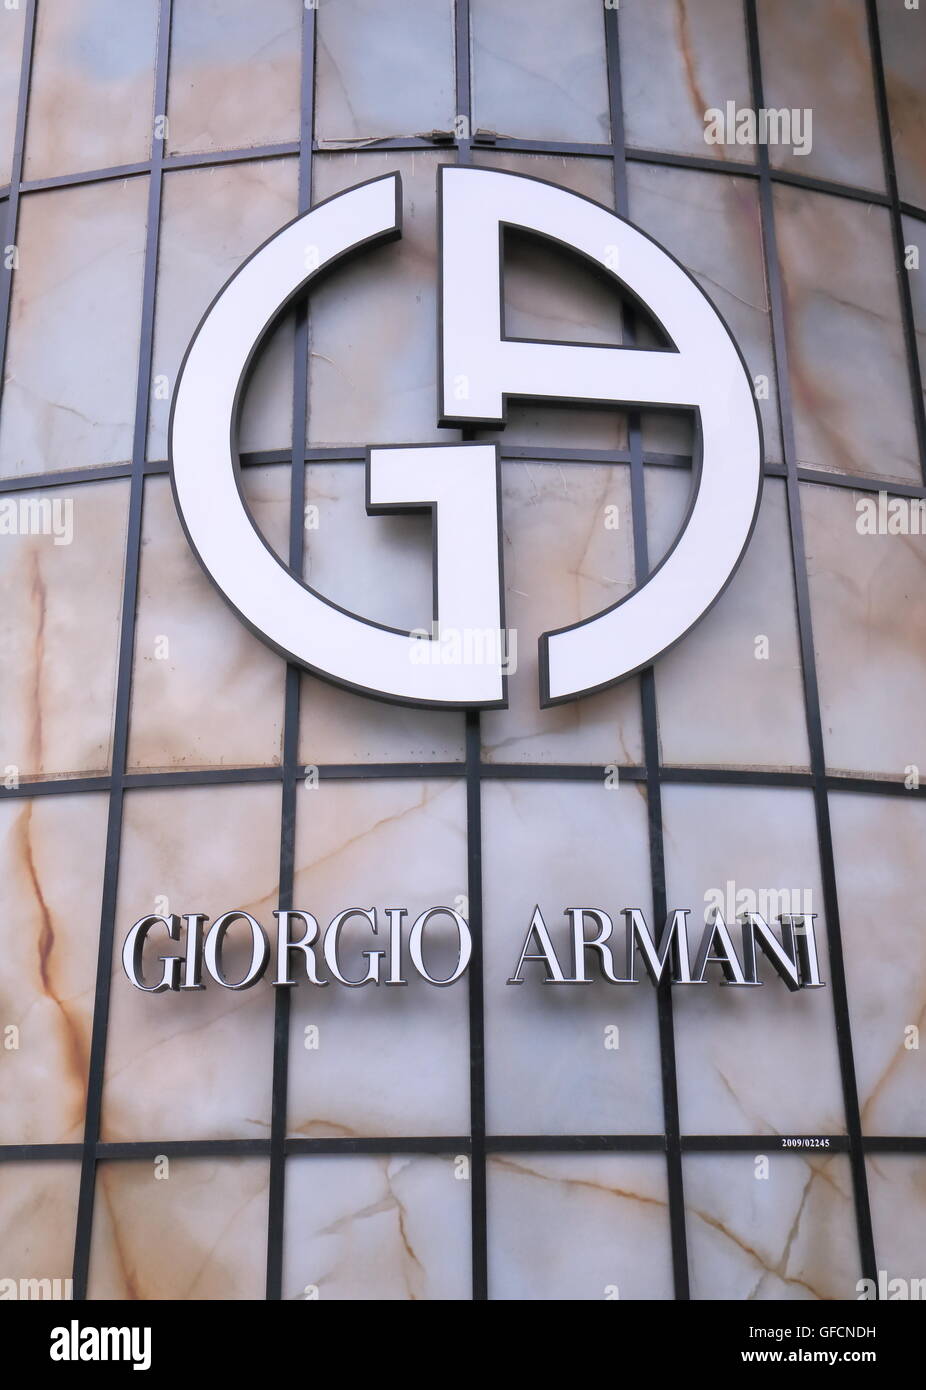 Introducir 61+ imagen giorgio armani founded - Abzlocal.mx